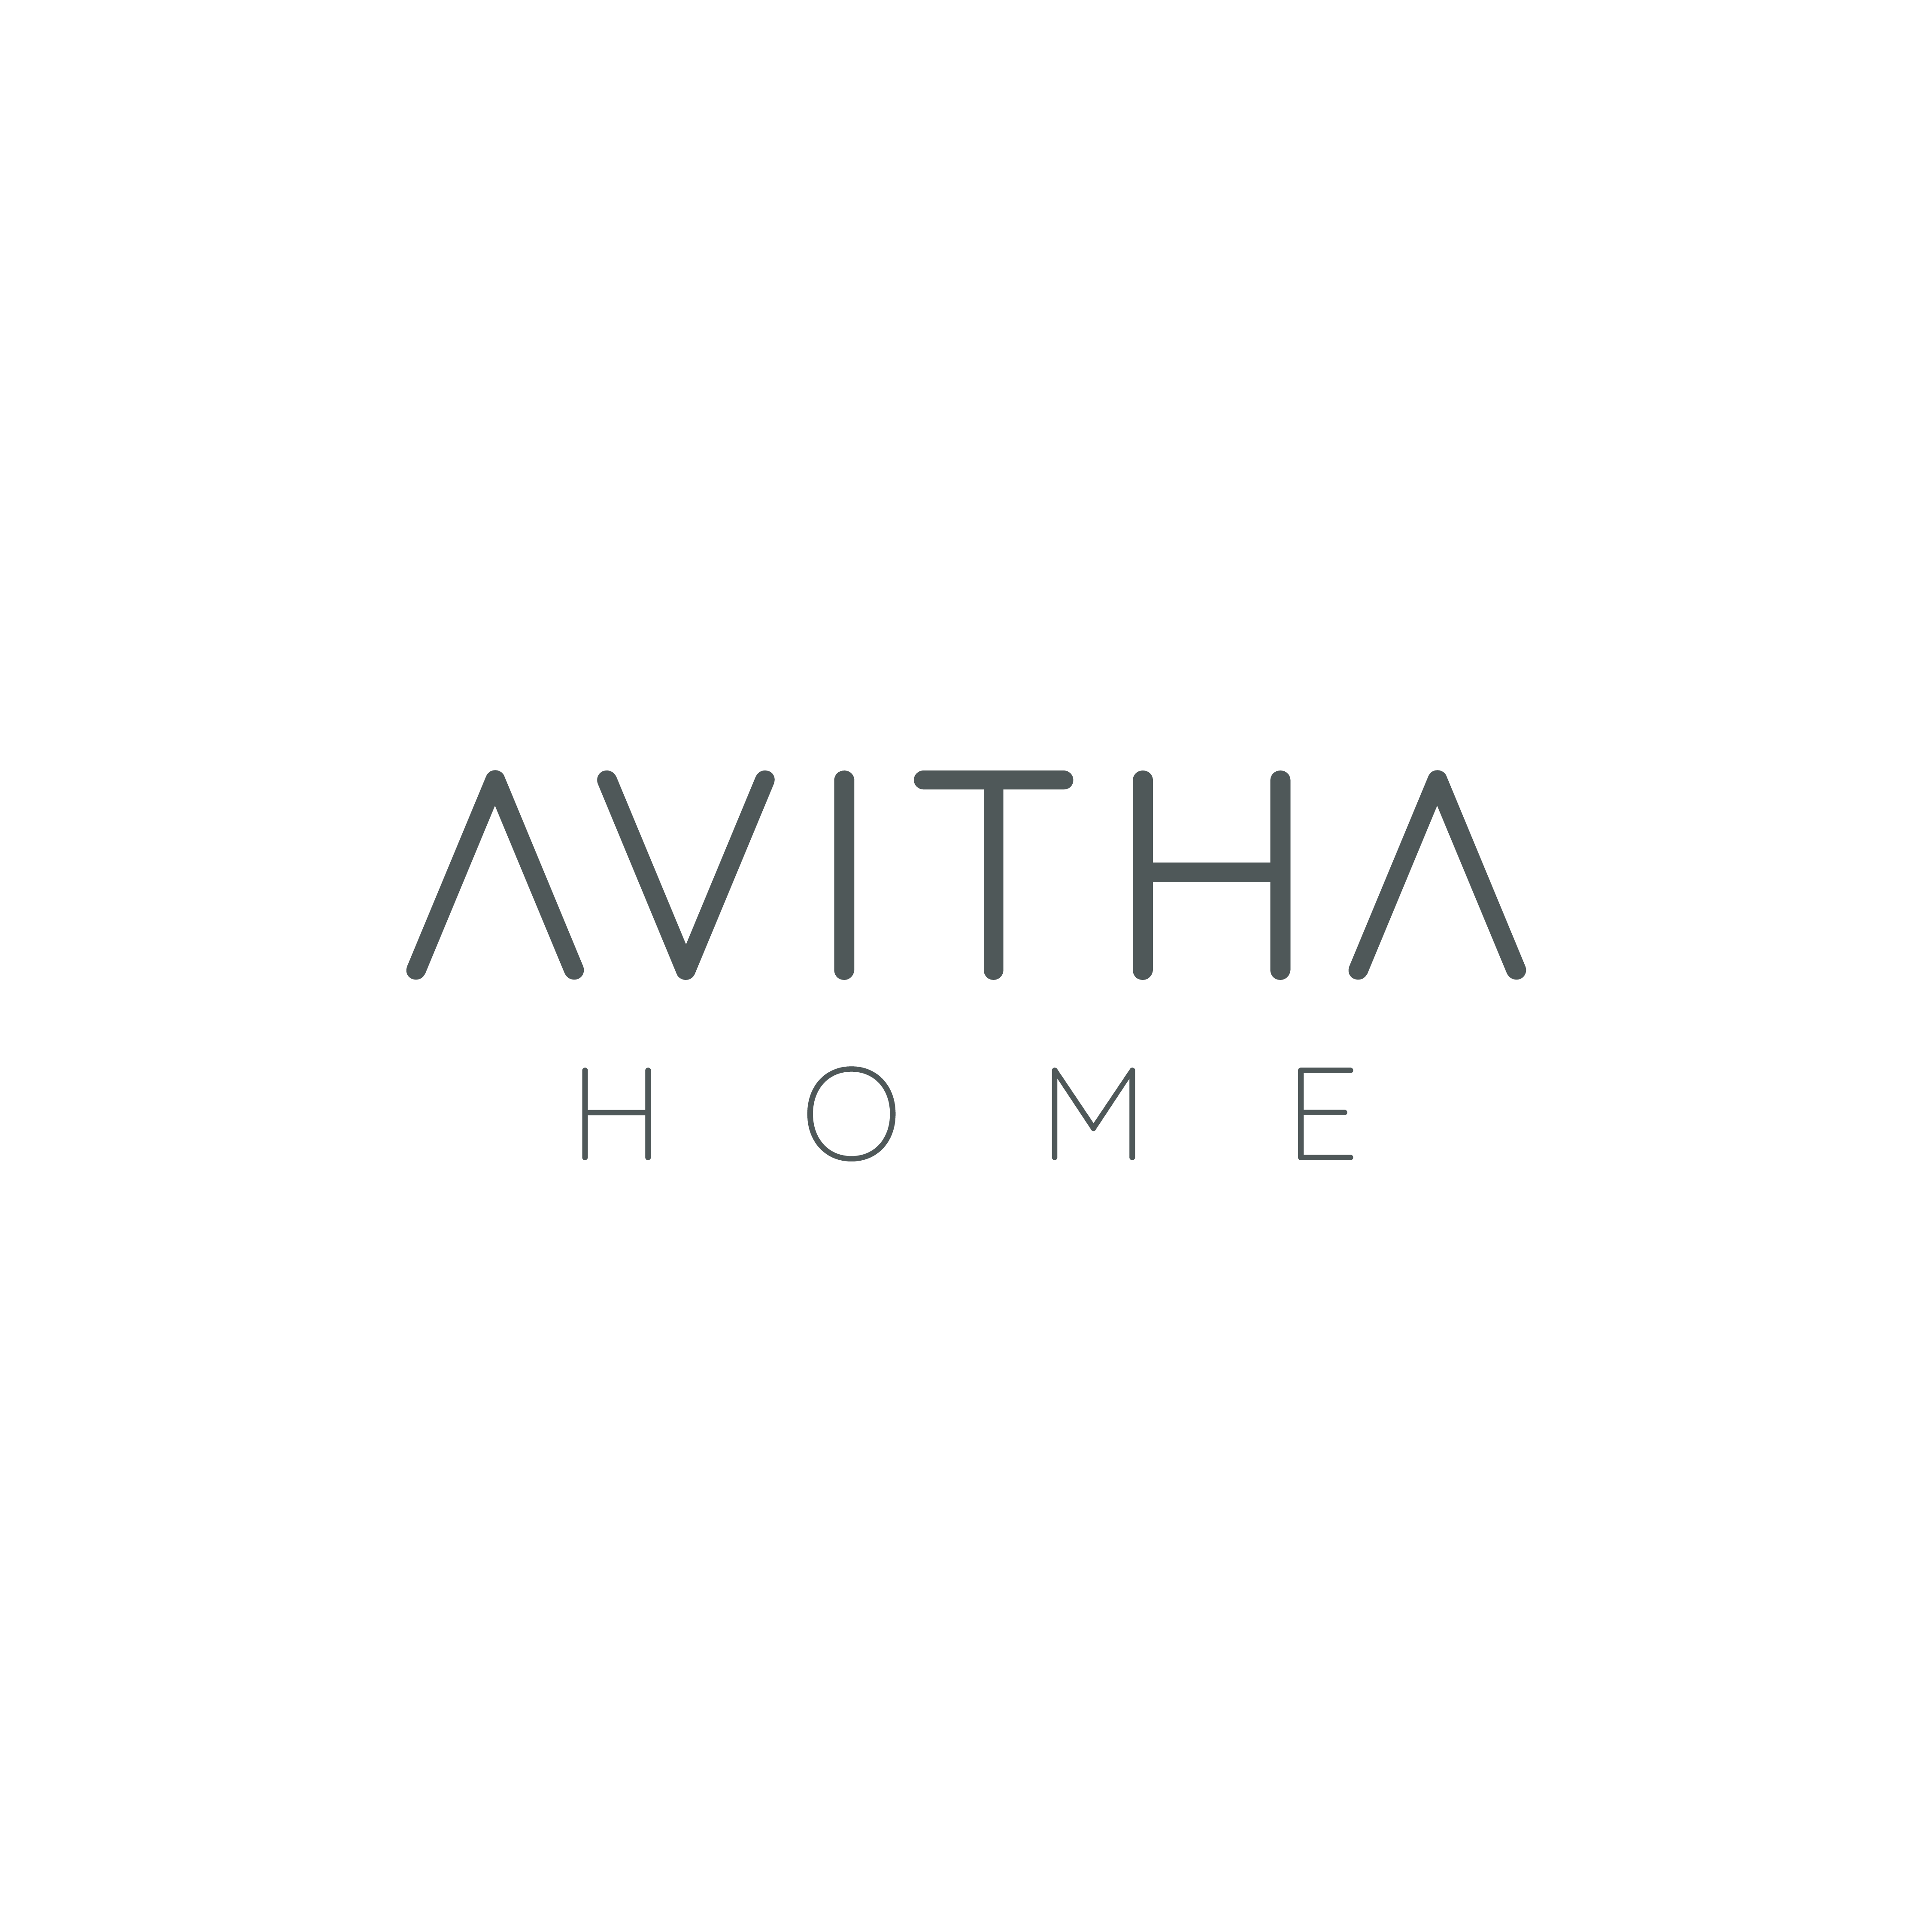 AvithaHome